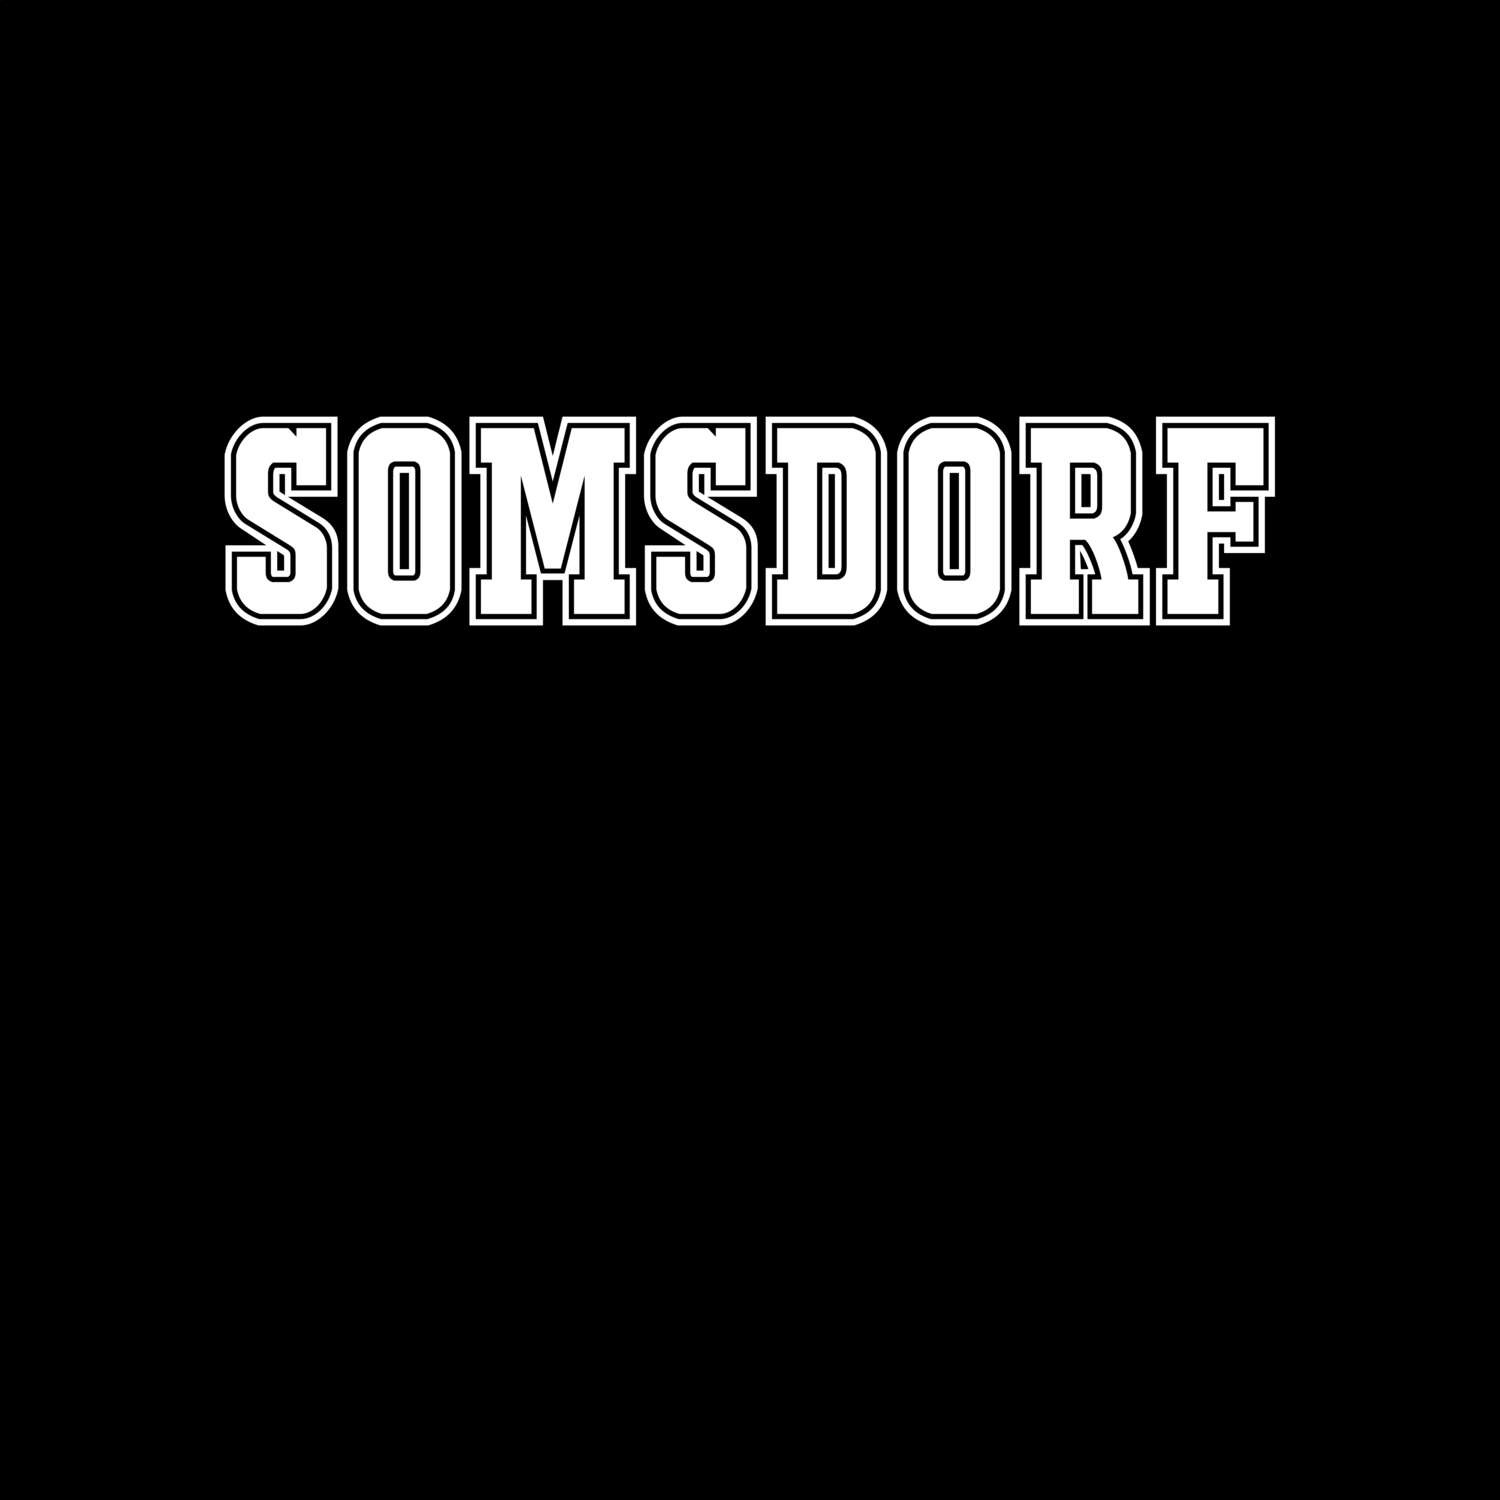 Somsdorf T-Shirt »Classic«